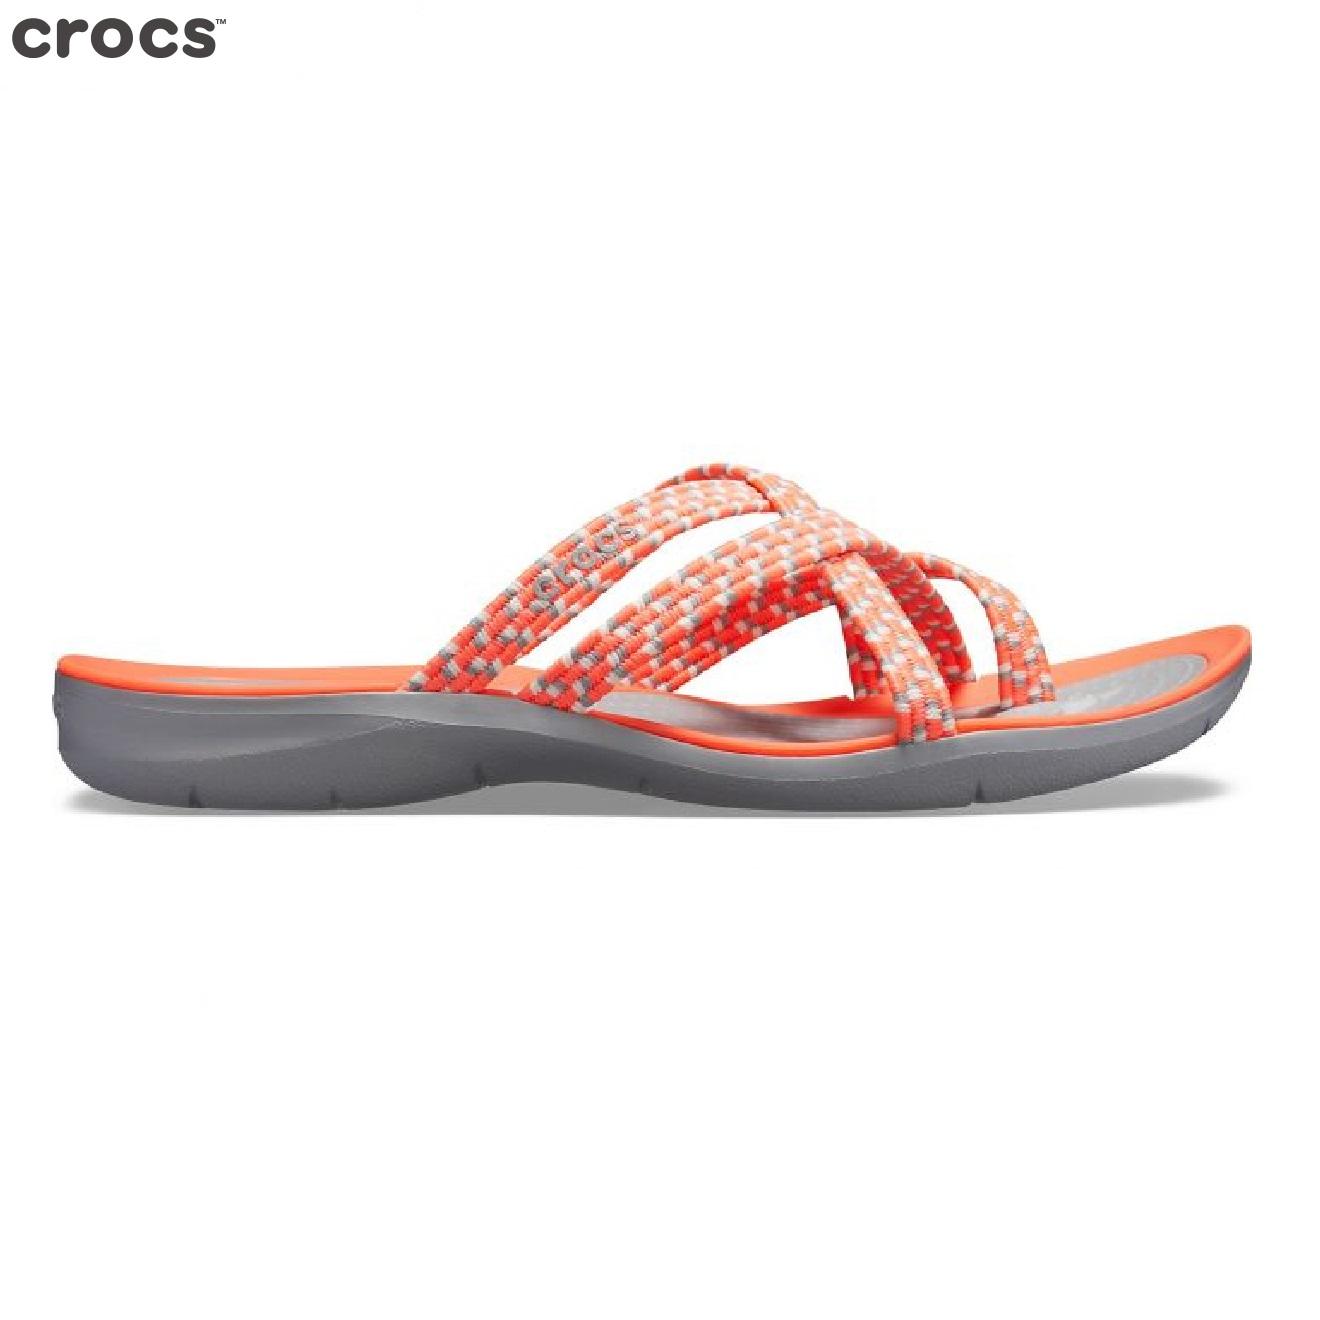 crocs swiftwater braided web flip